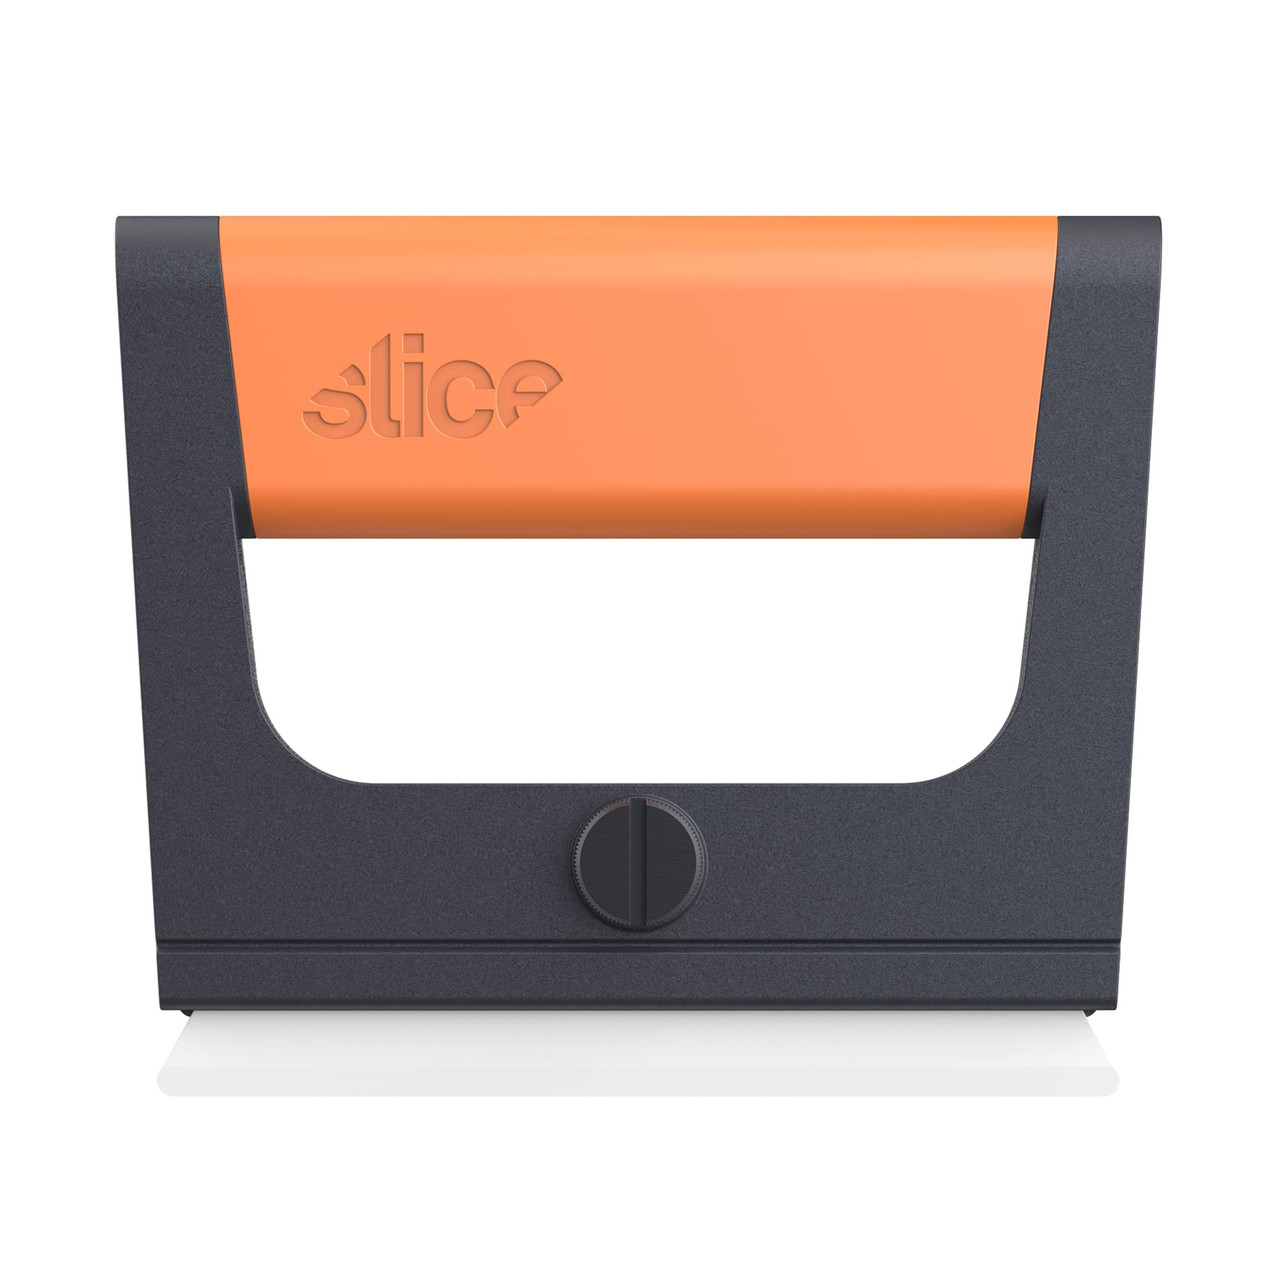 Slice Drywall Knife, Ergonomic Aluminum Handle for Easier Cuts (10582)